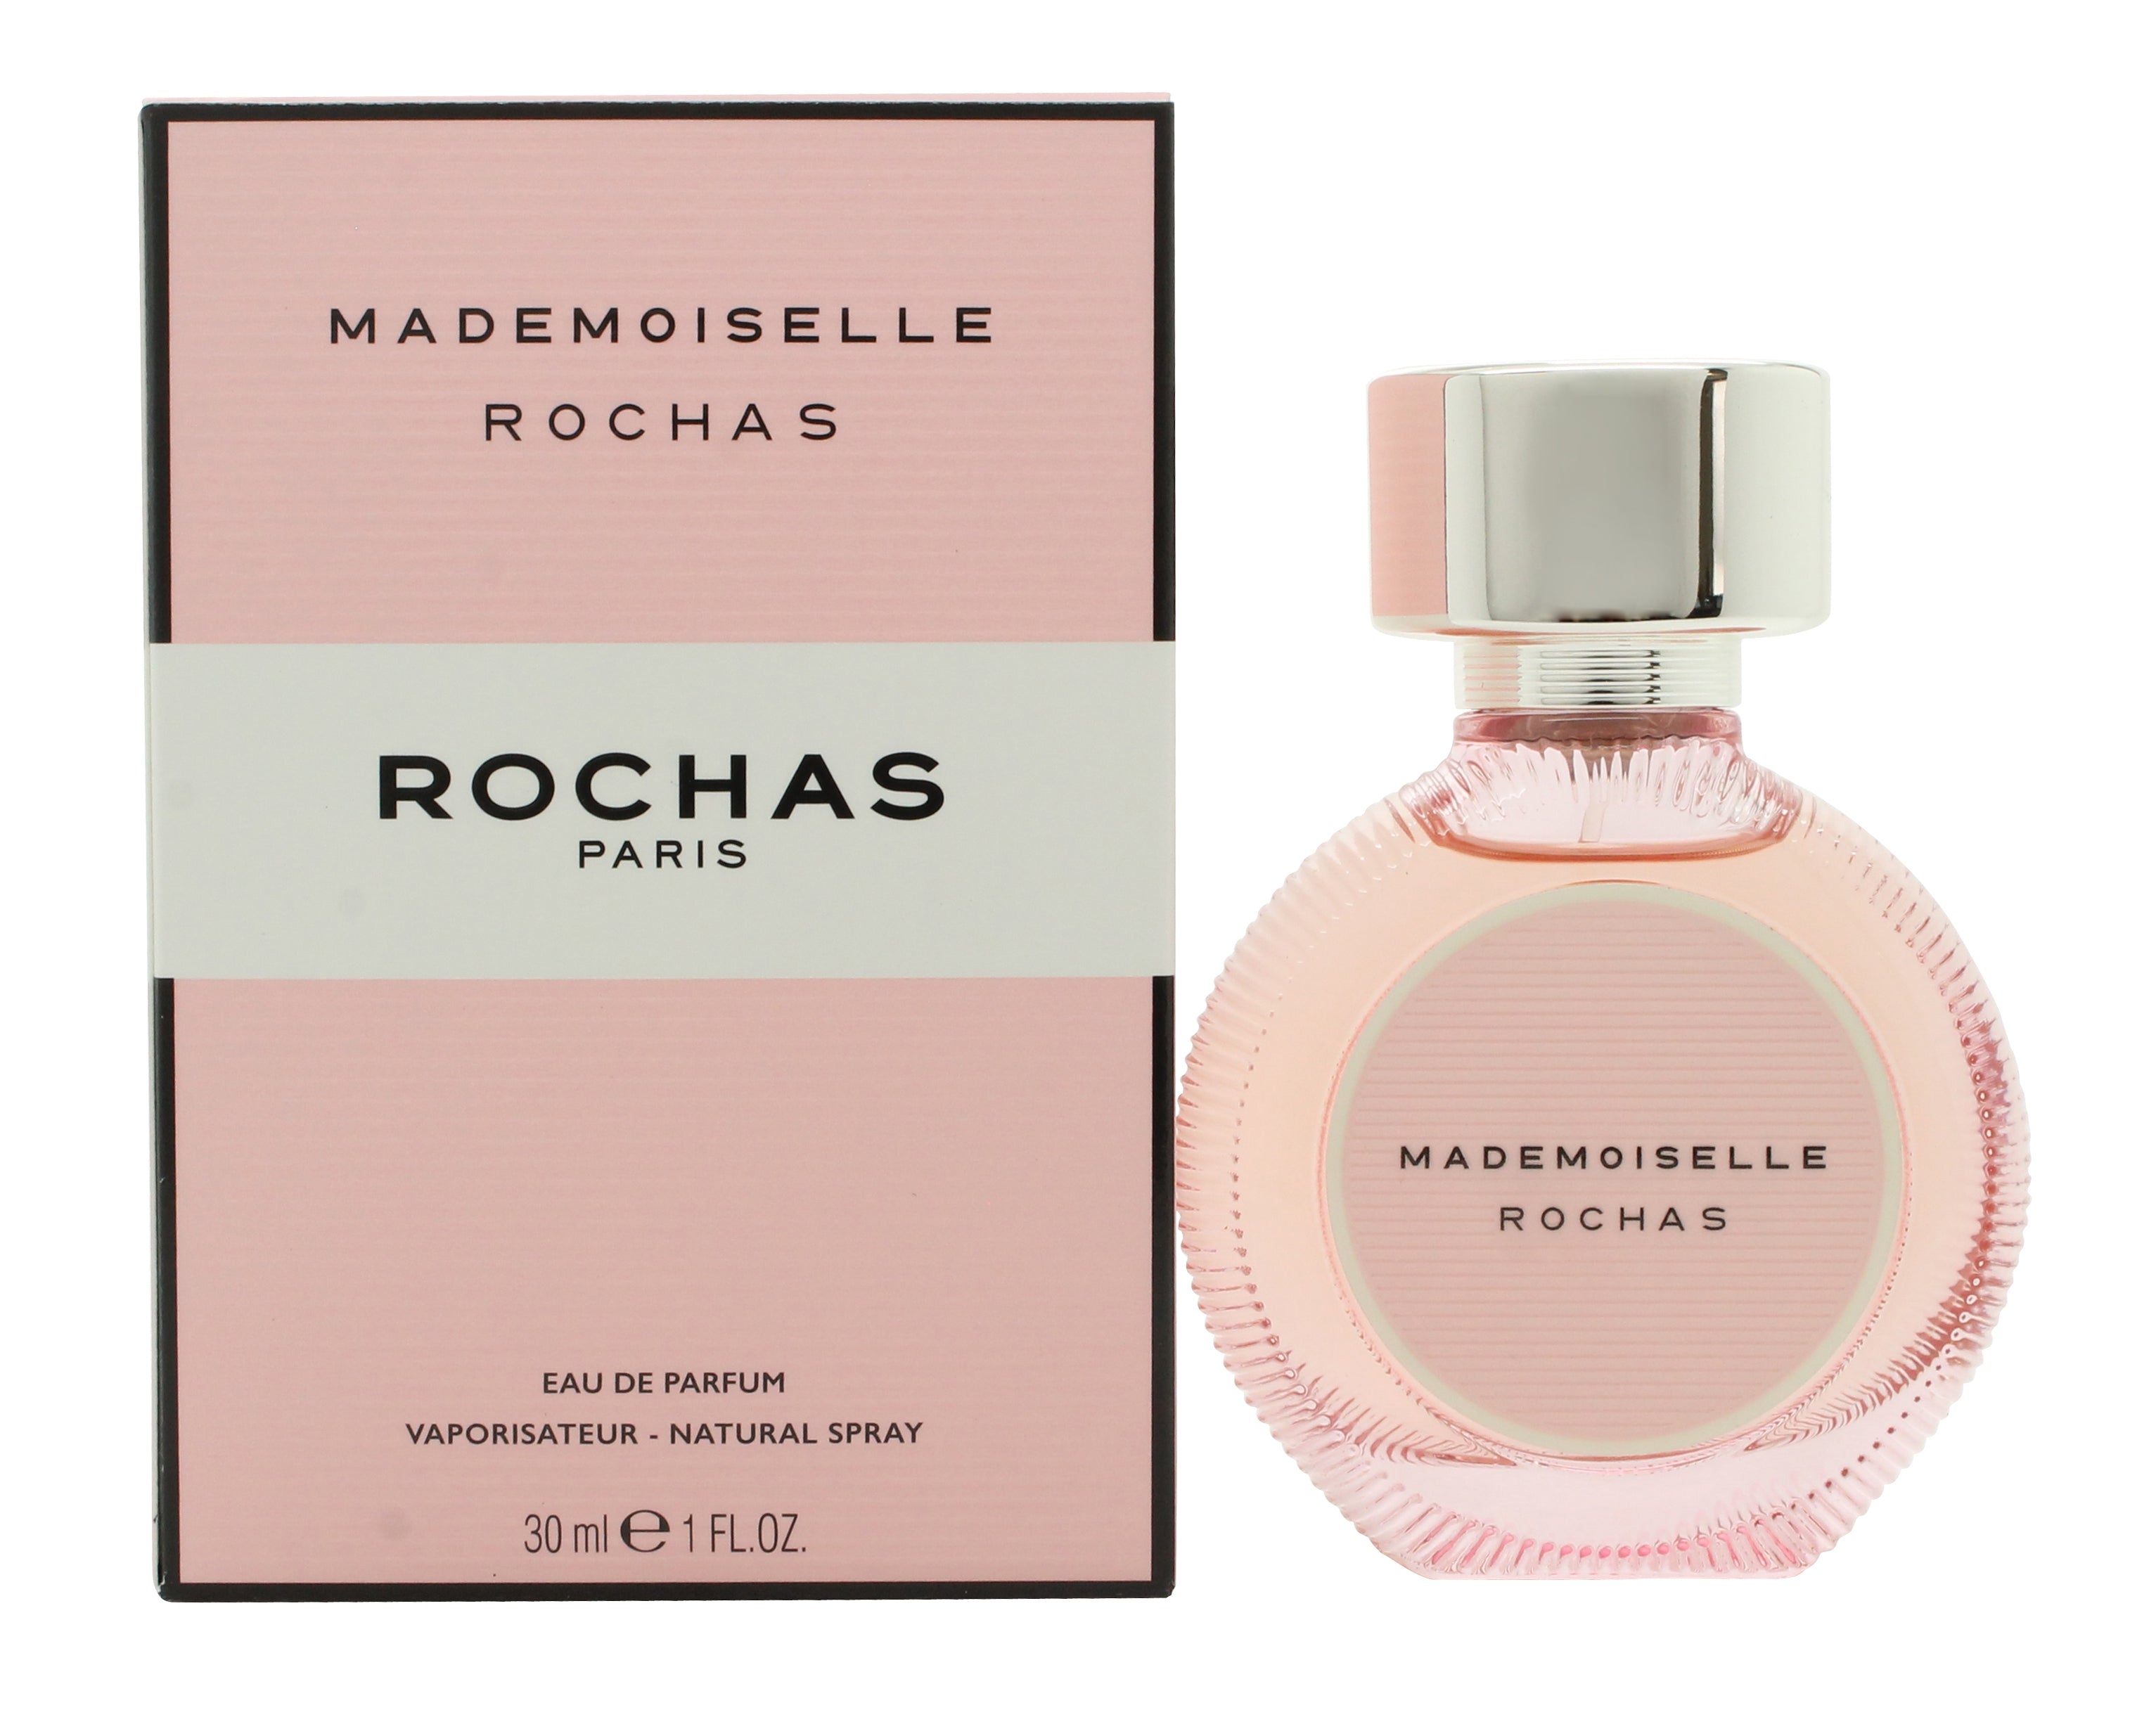 View Rochas Mademoiselle Rochas Eau de Parfum 30ml Spray information